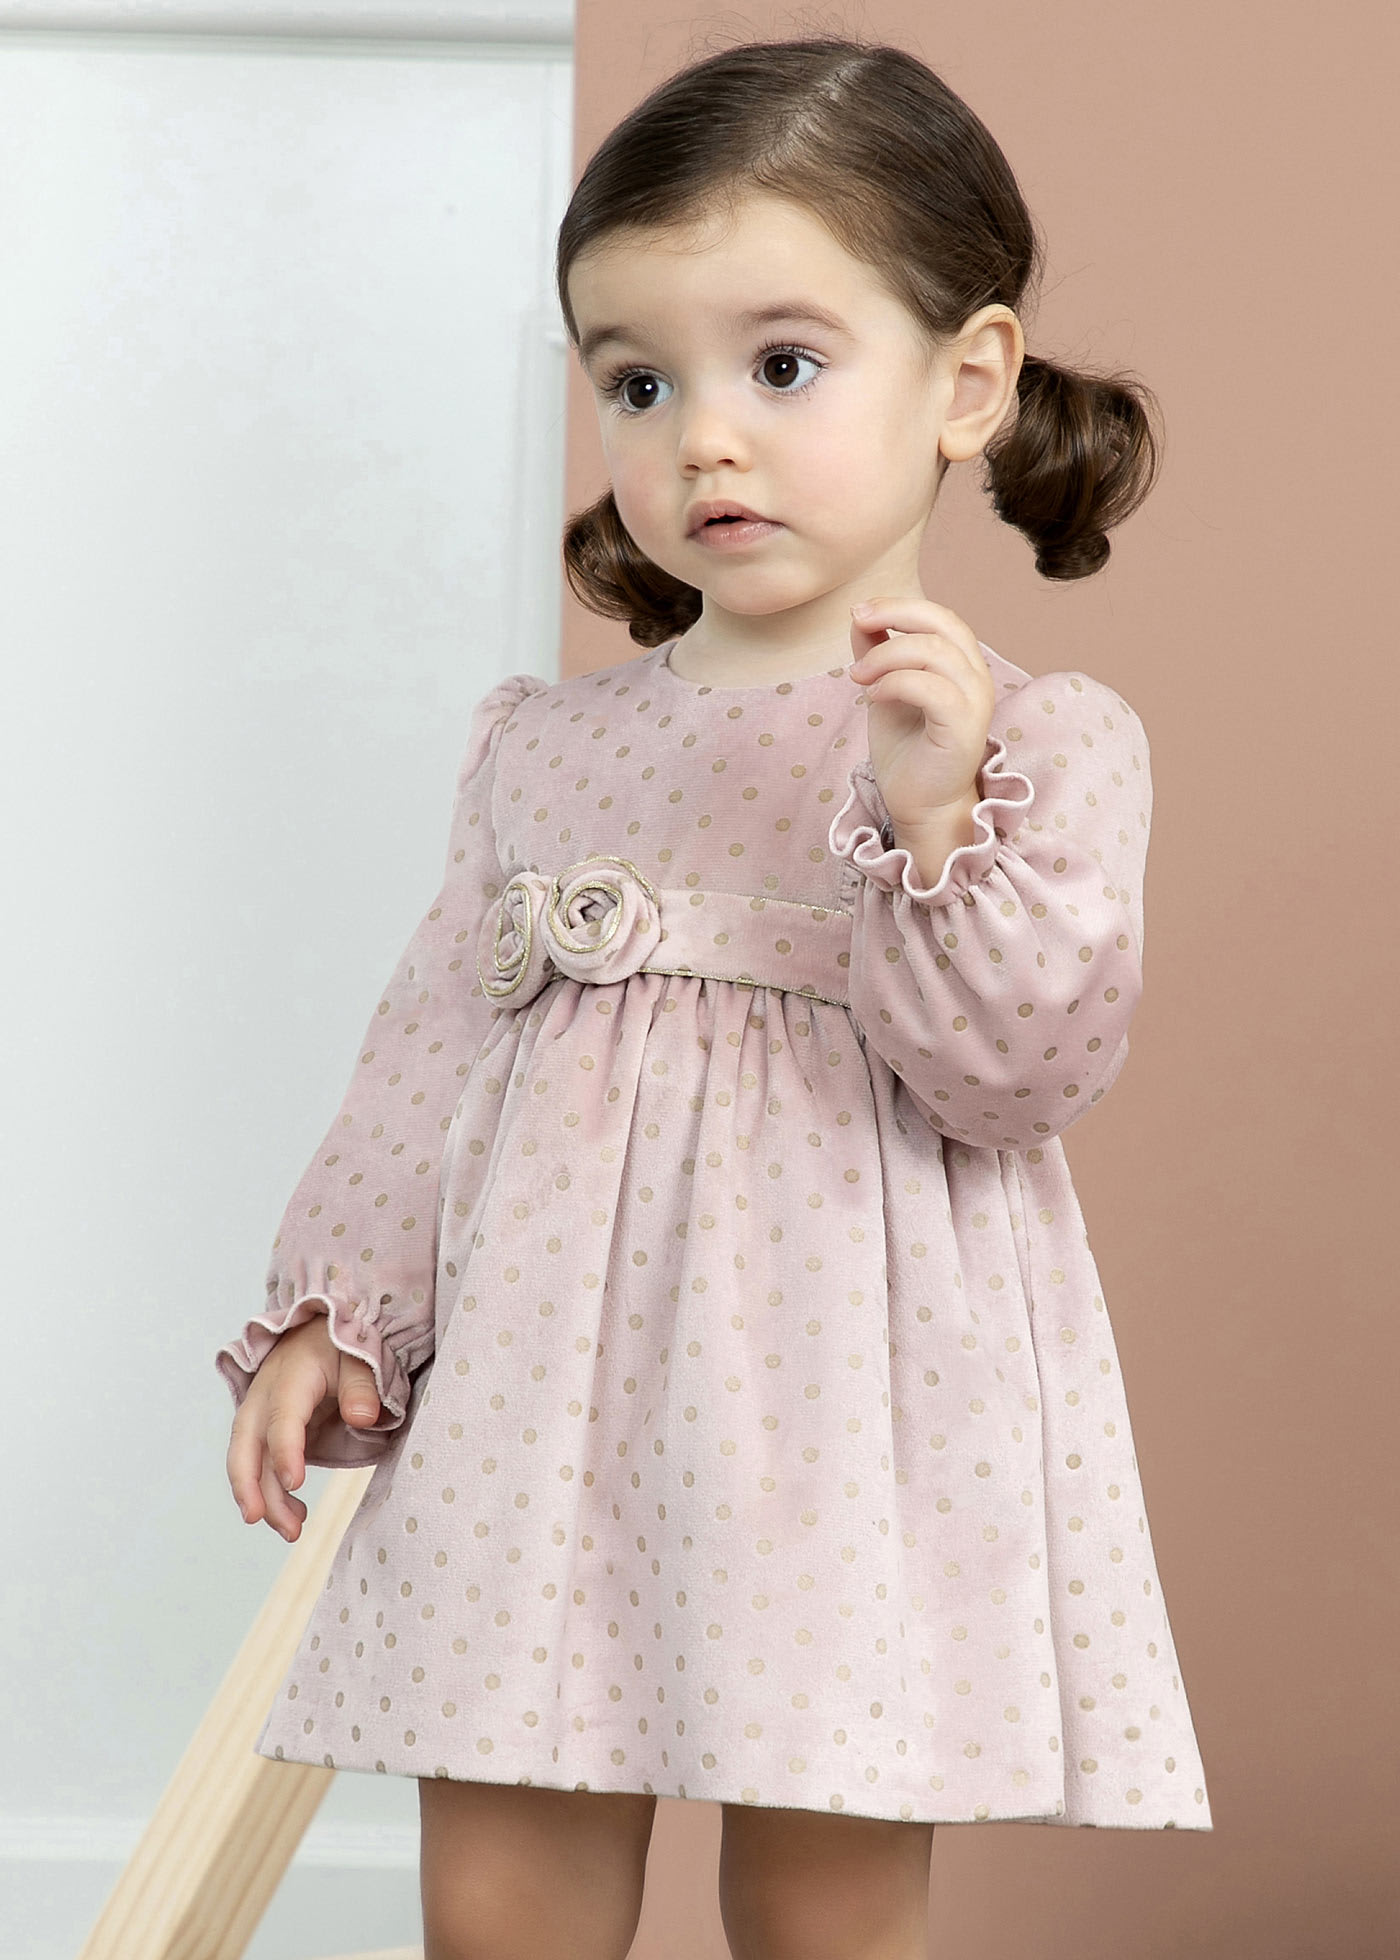 Baby velvet dress with polka dots